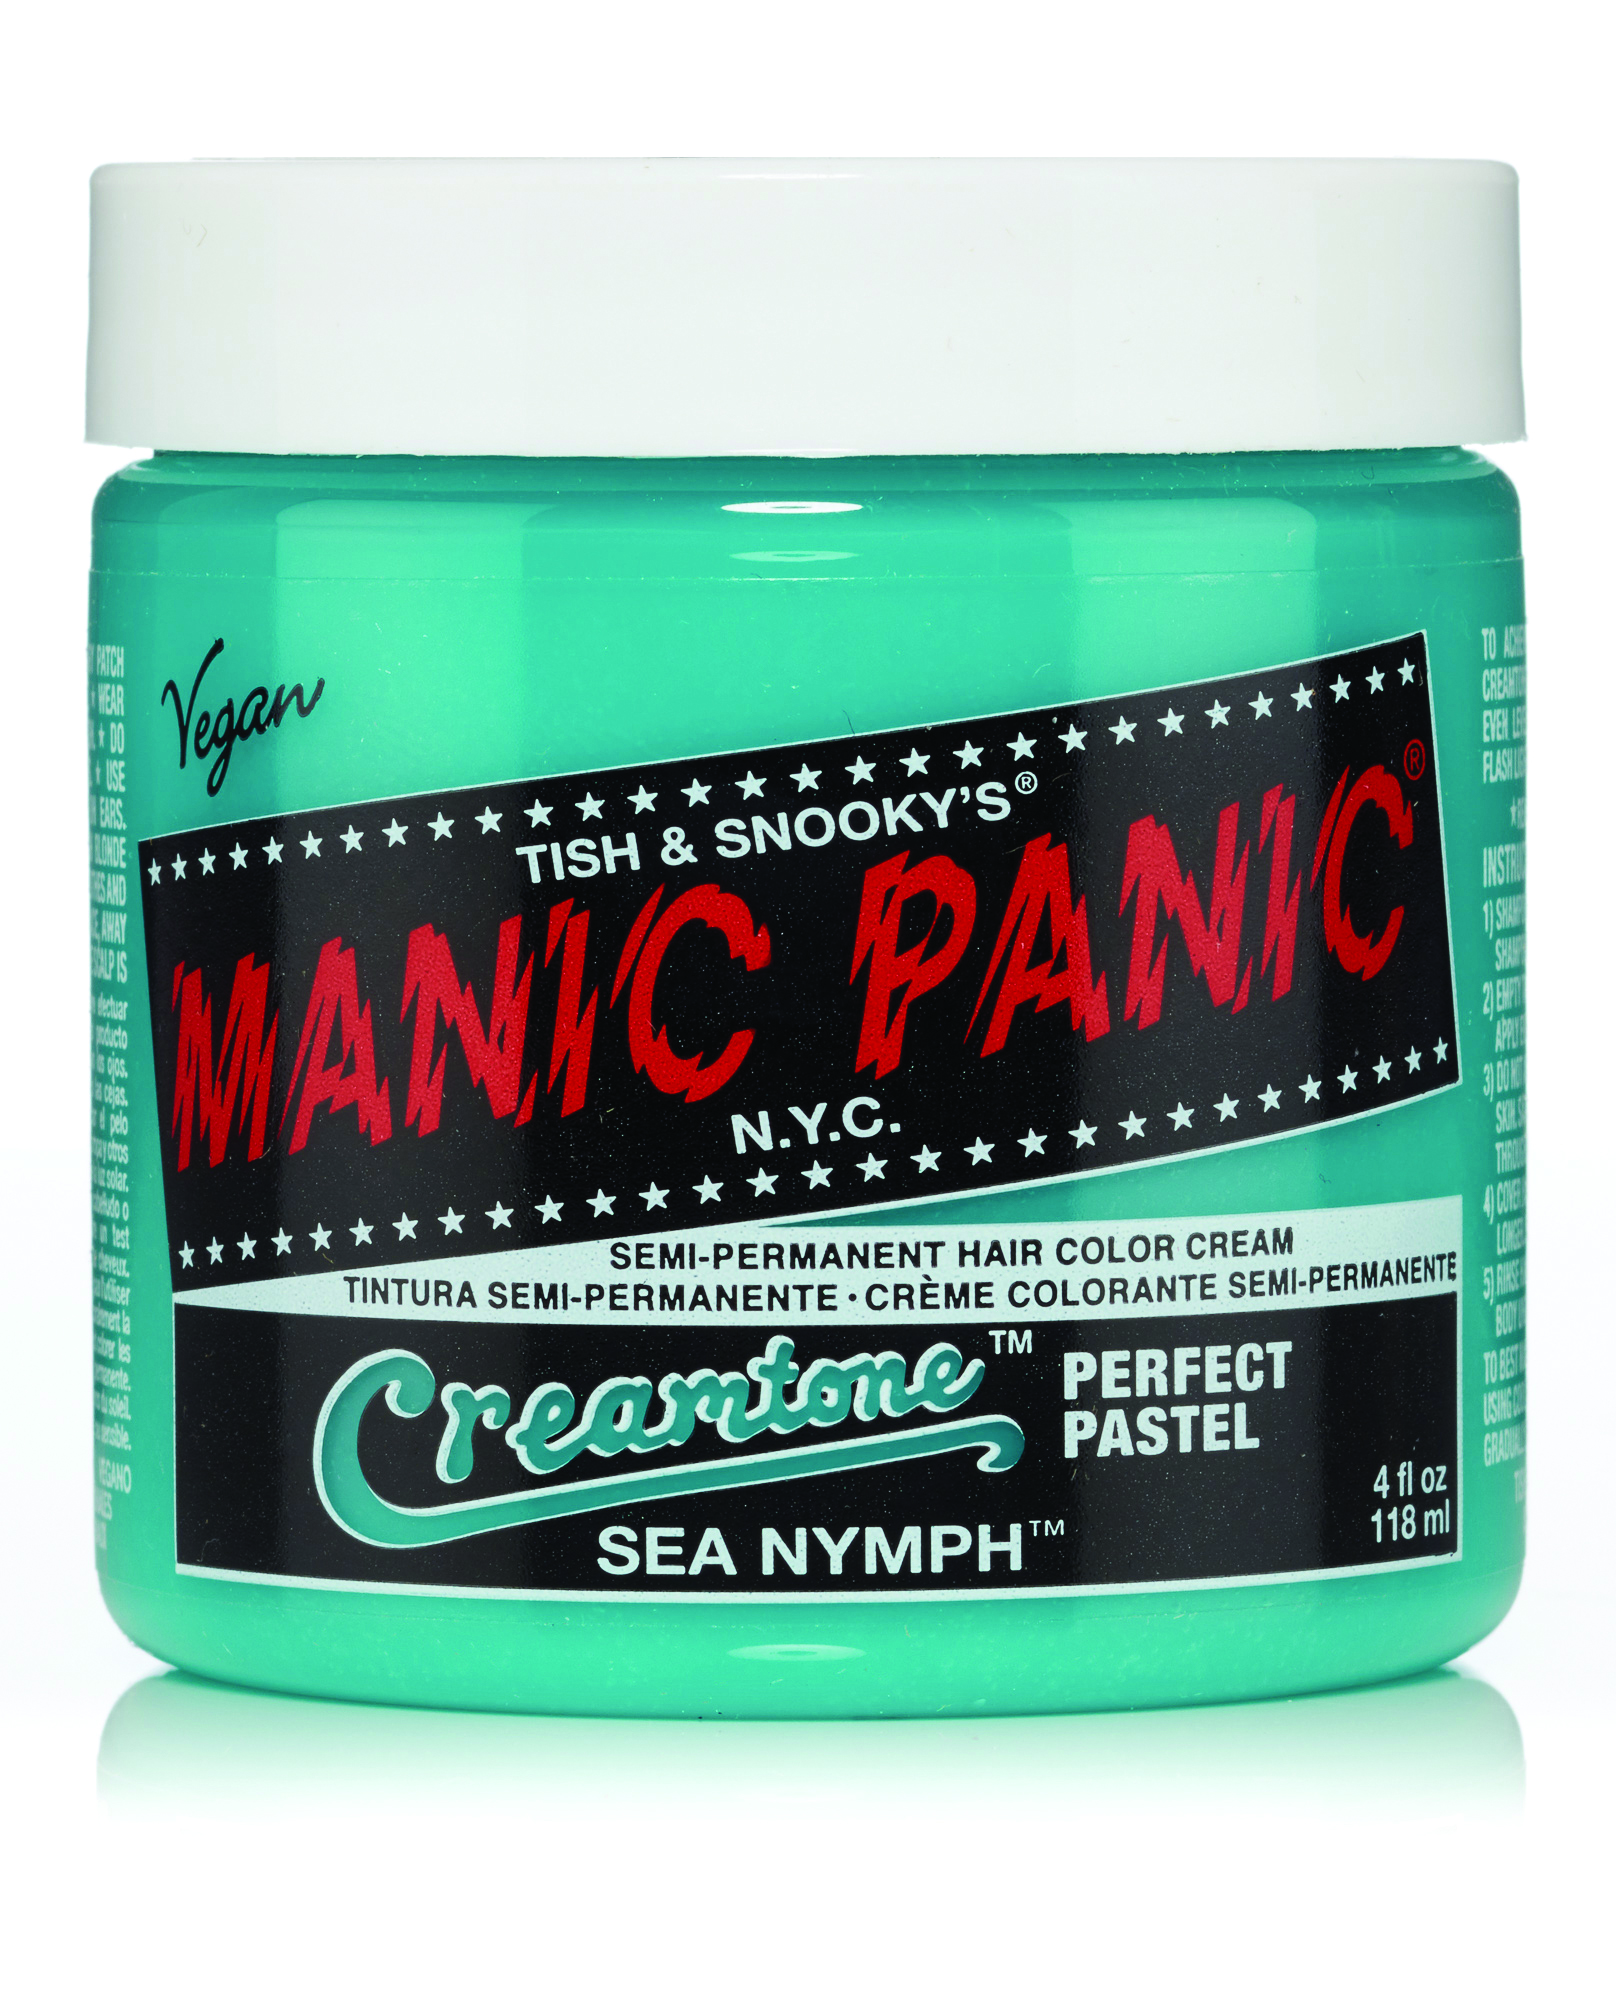 Manic Panic Sea Nymph Creamtone - Hair products New Zealand